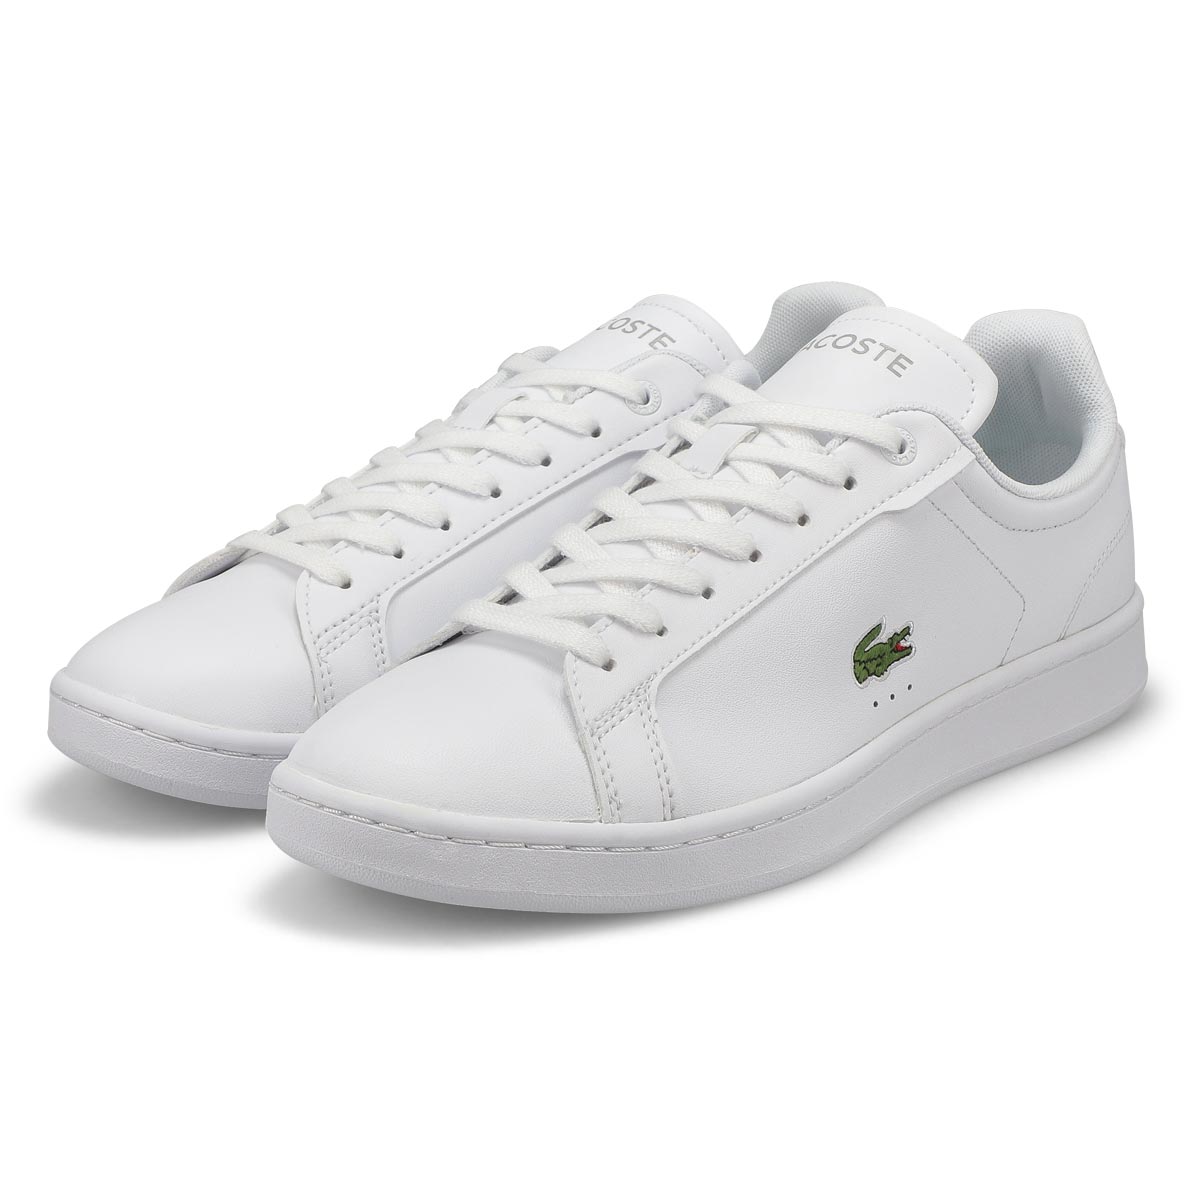 Lacoste Men's Carnaby Pro BL Sneaker -White | SoftMoc.com